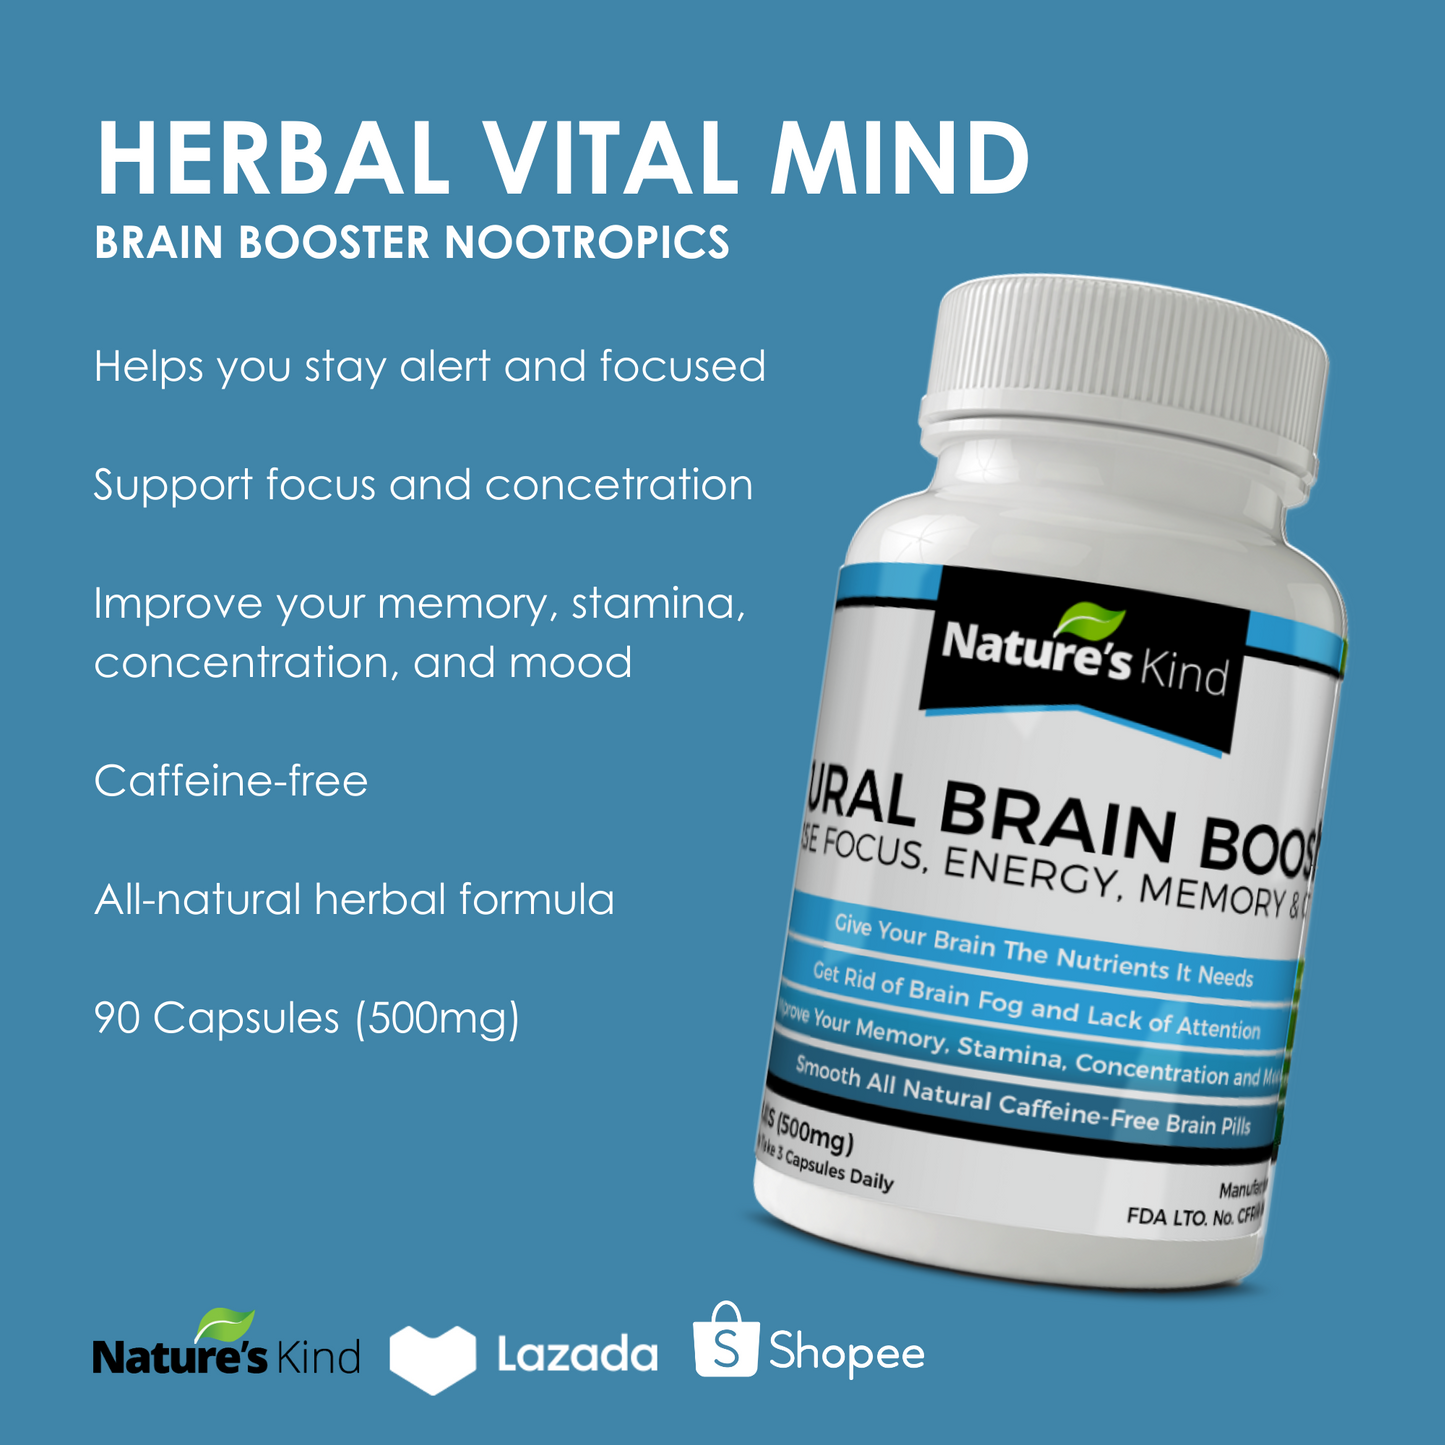 VitalMind Brain Booster Nootropics - Increase Focus, Energy, Memory & Clarity ★ Best Brain Vitamin Supplement